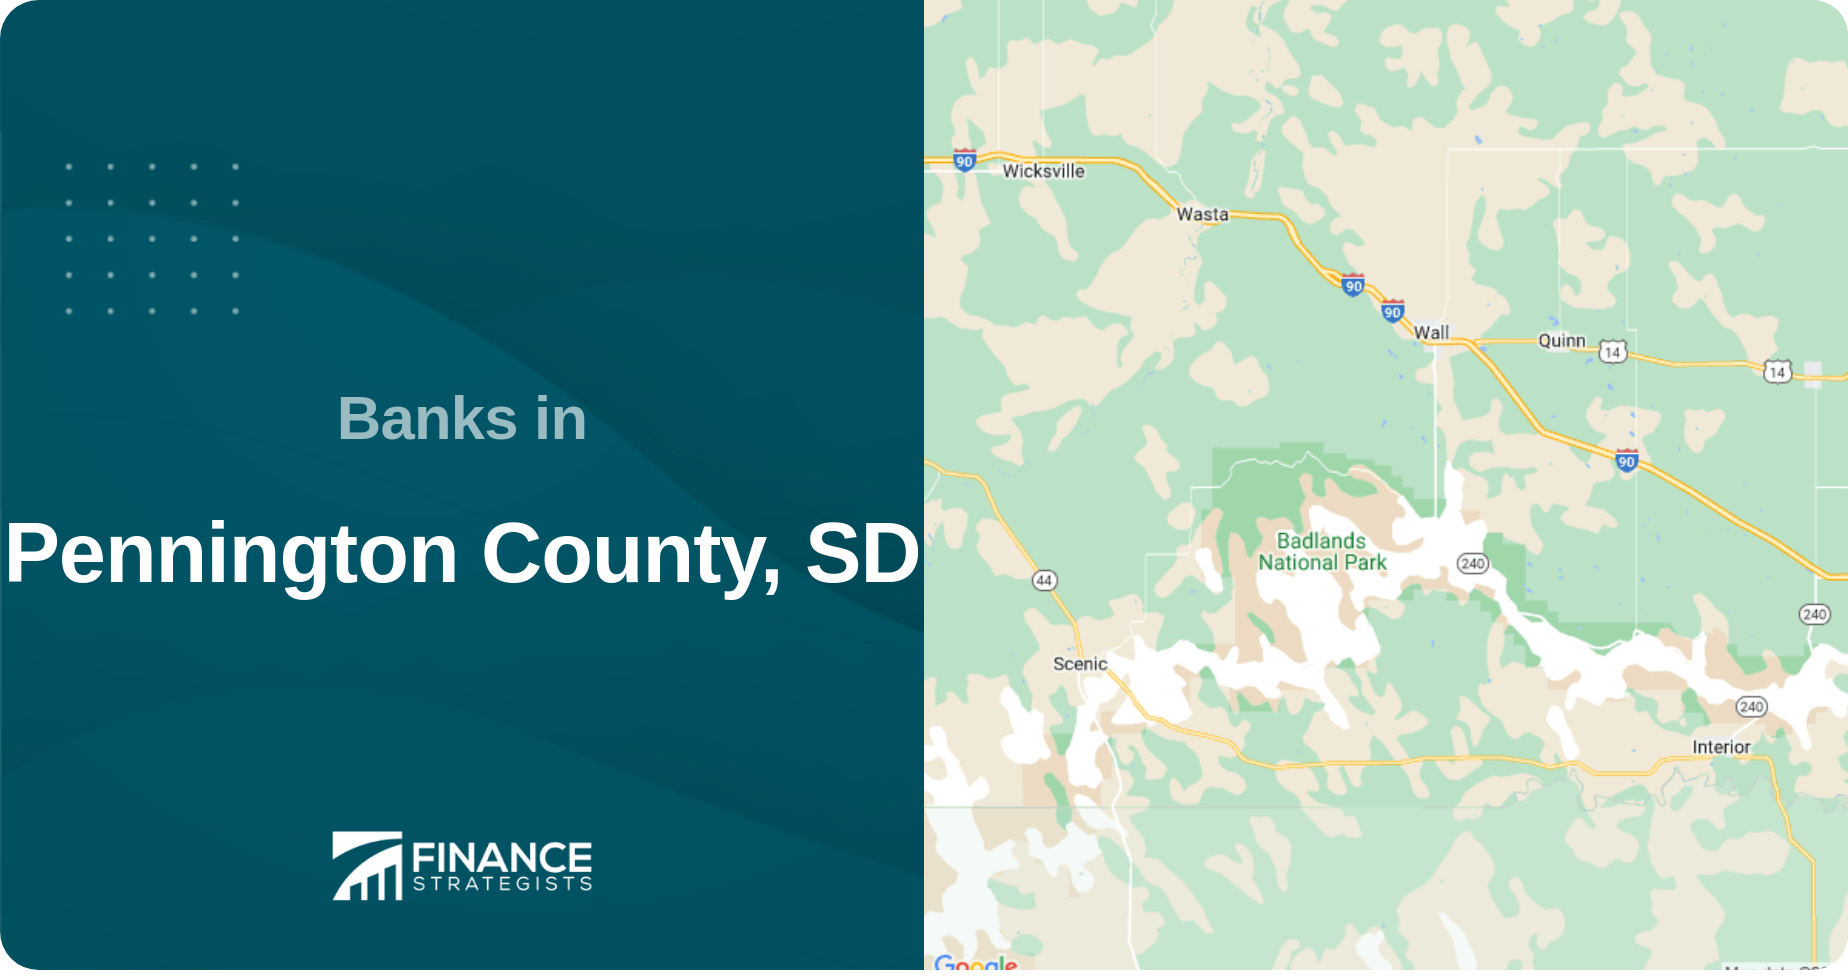 Banks in Pennington County, SD